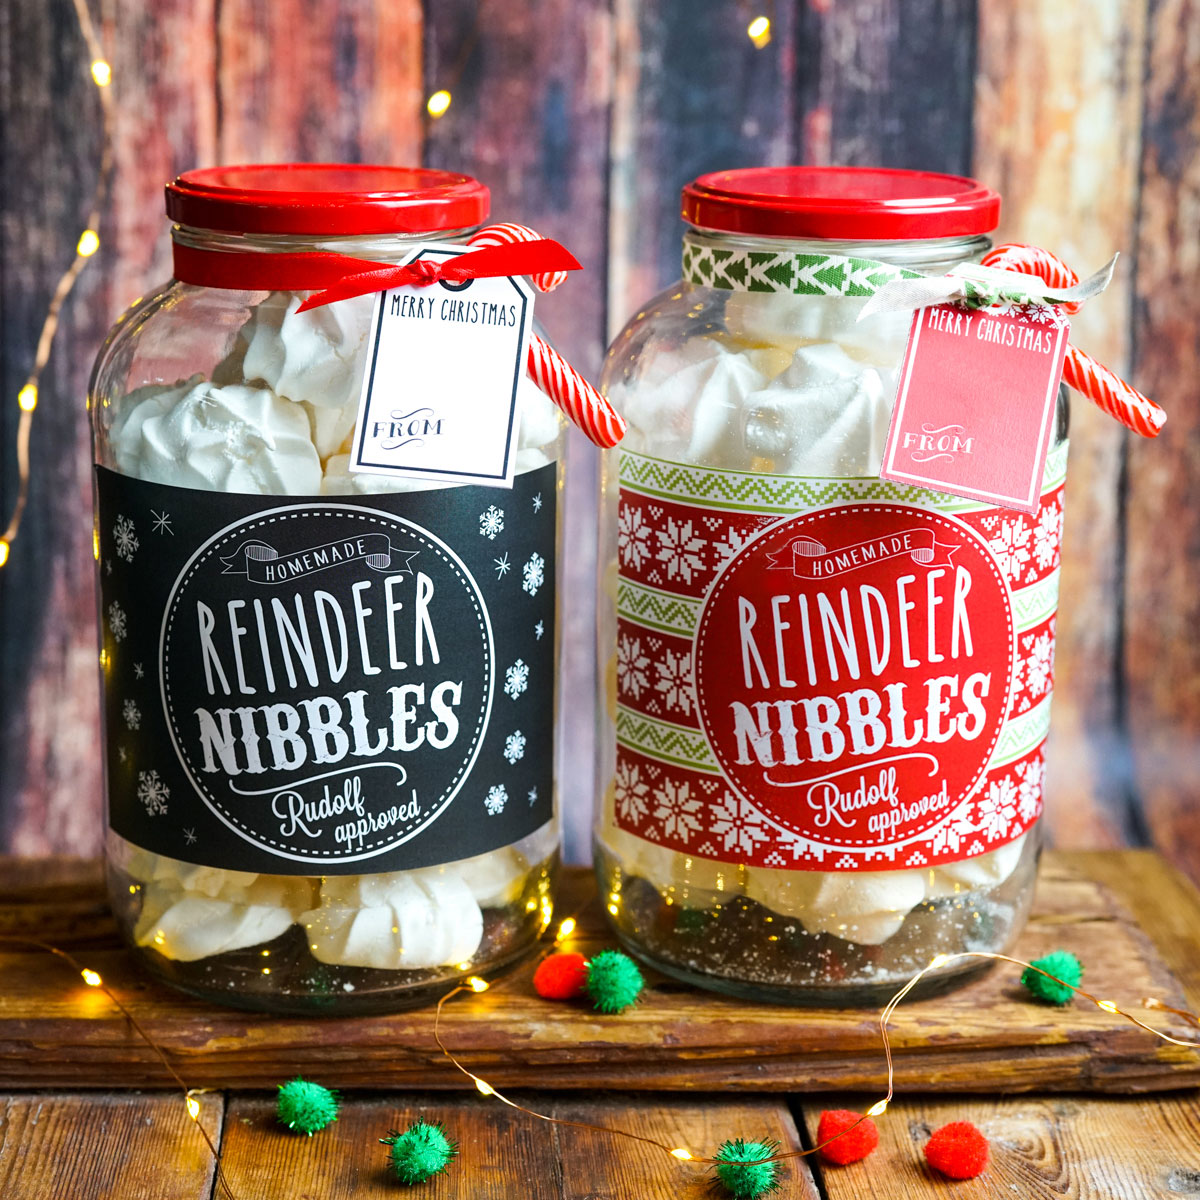 Free Reindeer Nibbles Cookie Jar Labels in Red and Chalkboard